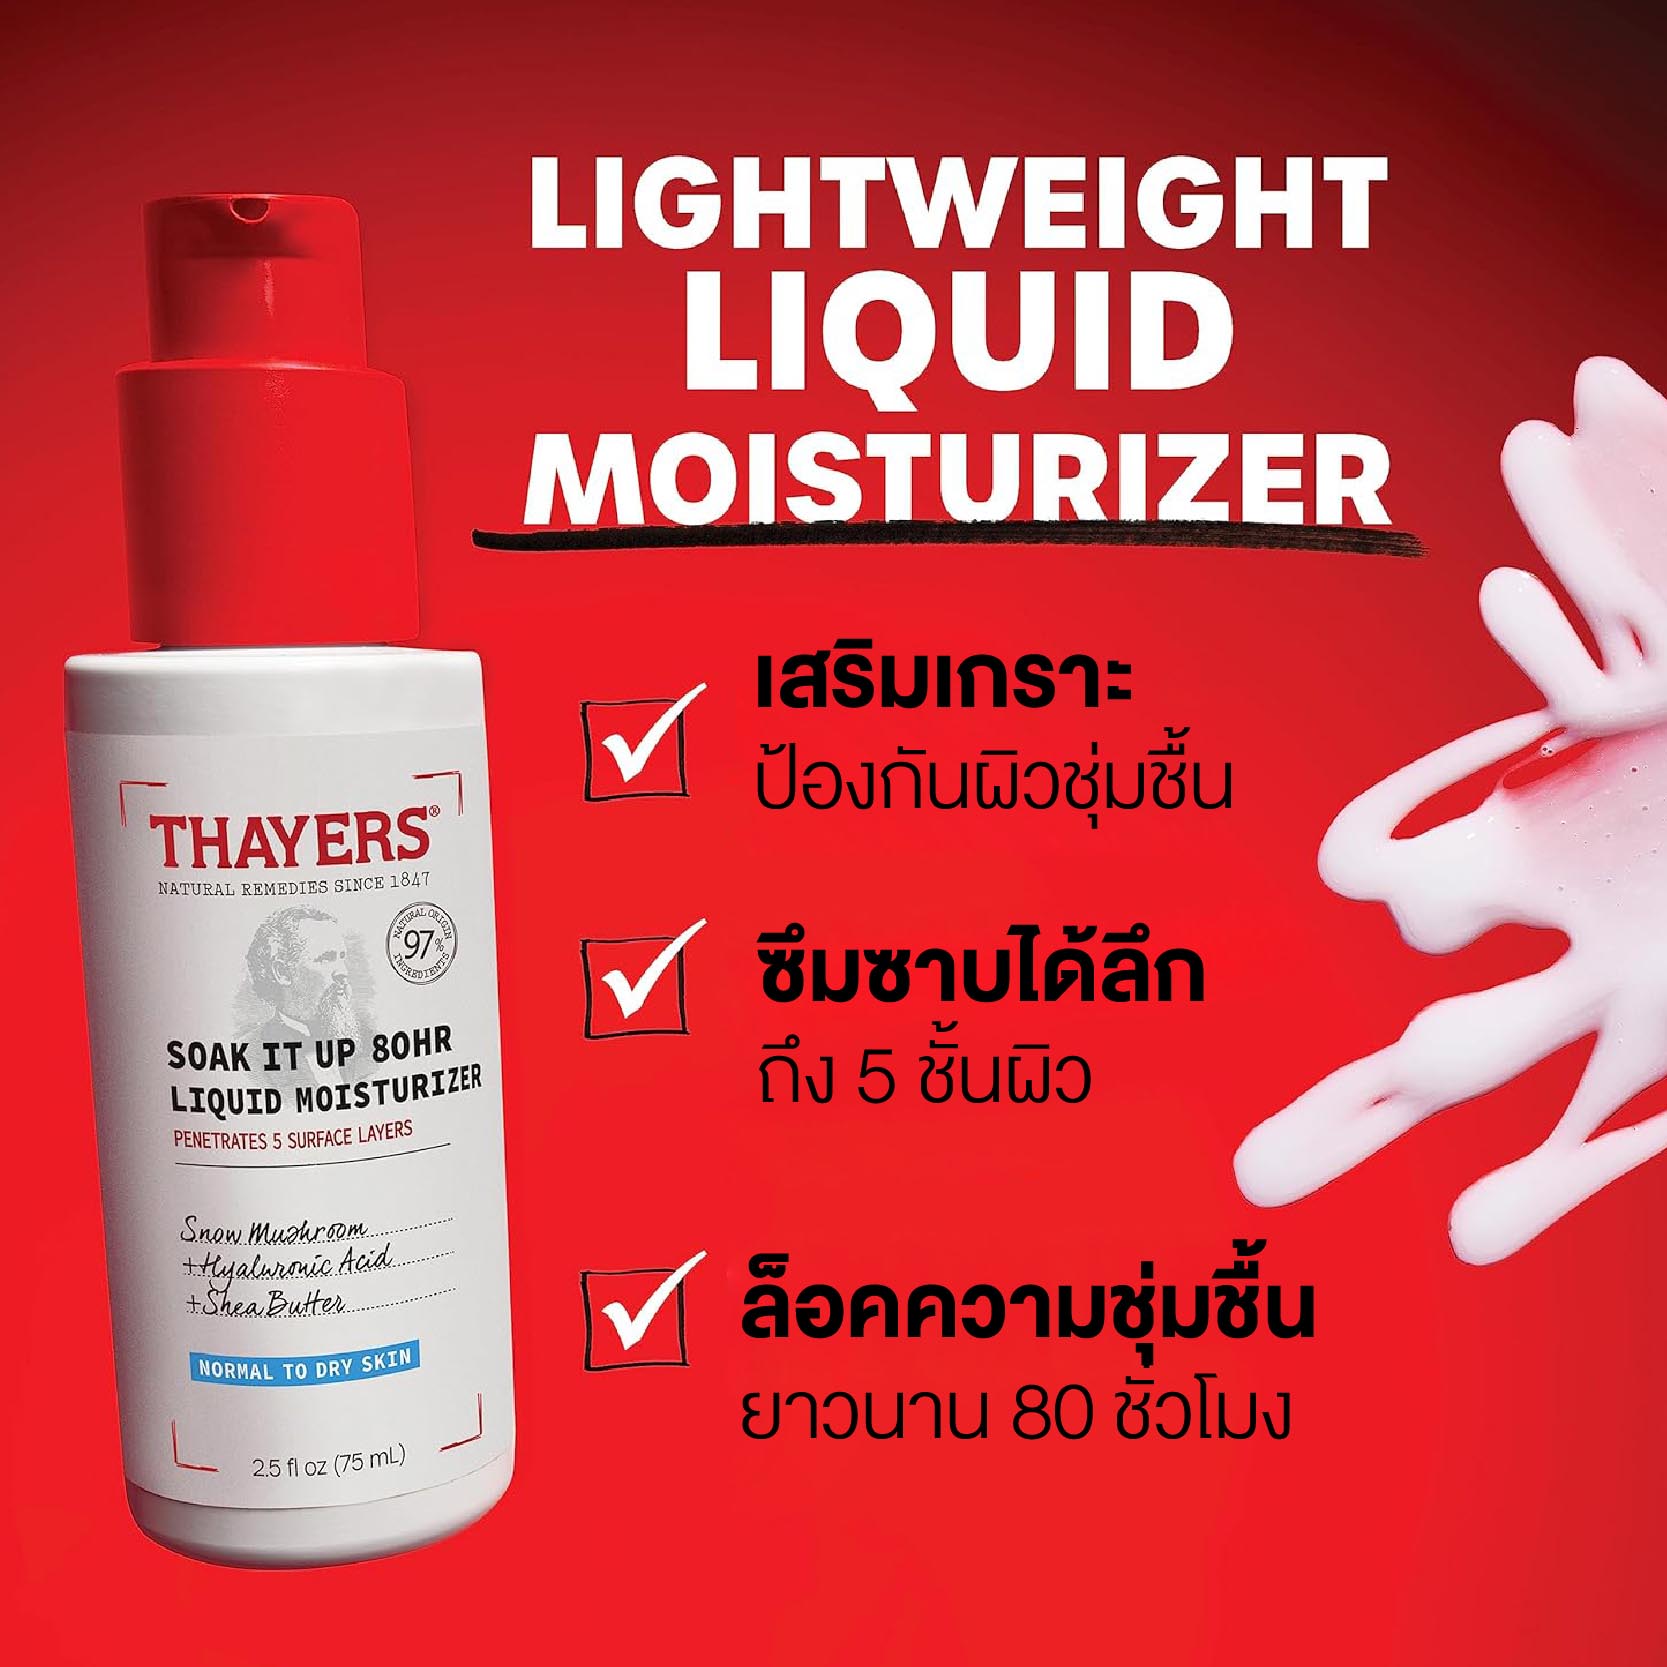 Thayers Soak It Up 80Hr Liquid Moisturizer Normal To Dry Skin 75 ml